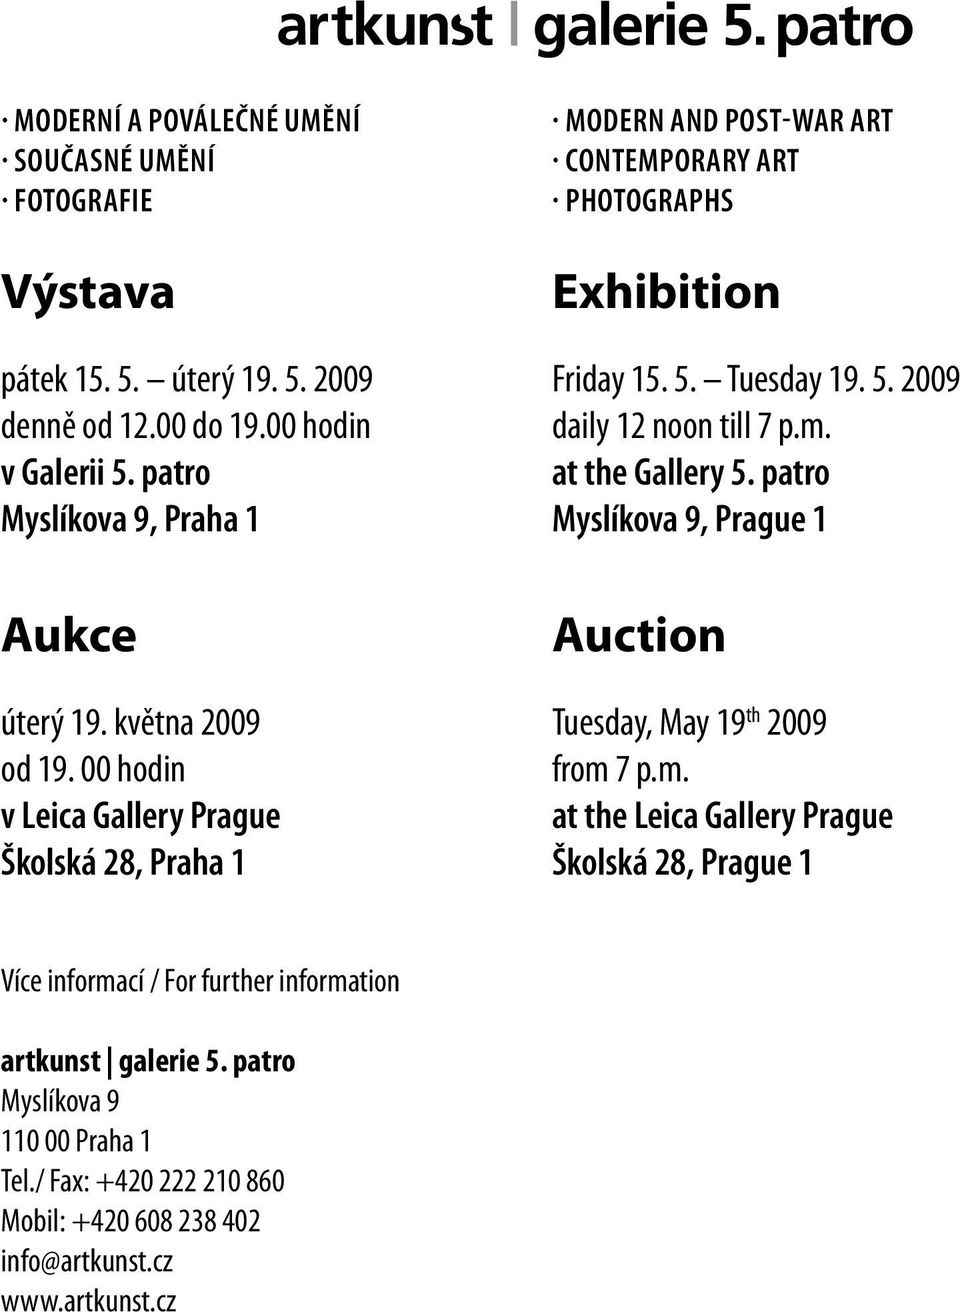 00 hodin v Leica Gallery Prague Školská 28, Praha 1 Modern and post-war art Contemporary art Photographs Exhibition Friday 15. 5. Tuesday 19. 5. 2009 daily 12 noon till 7 p.